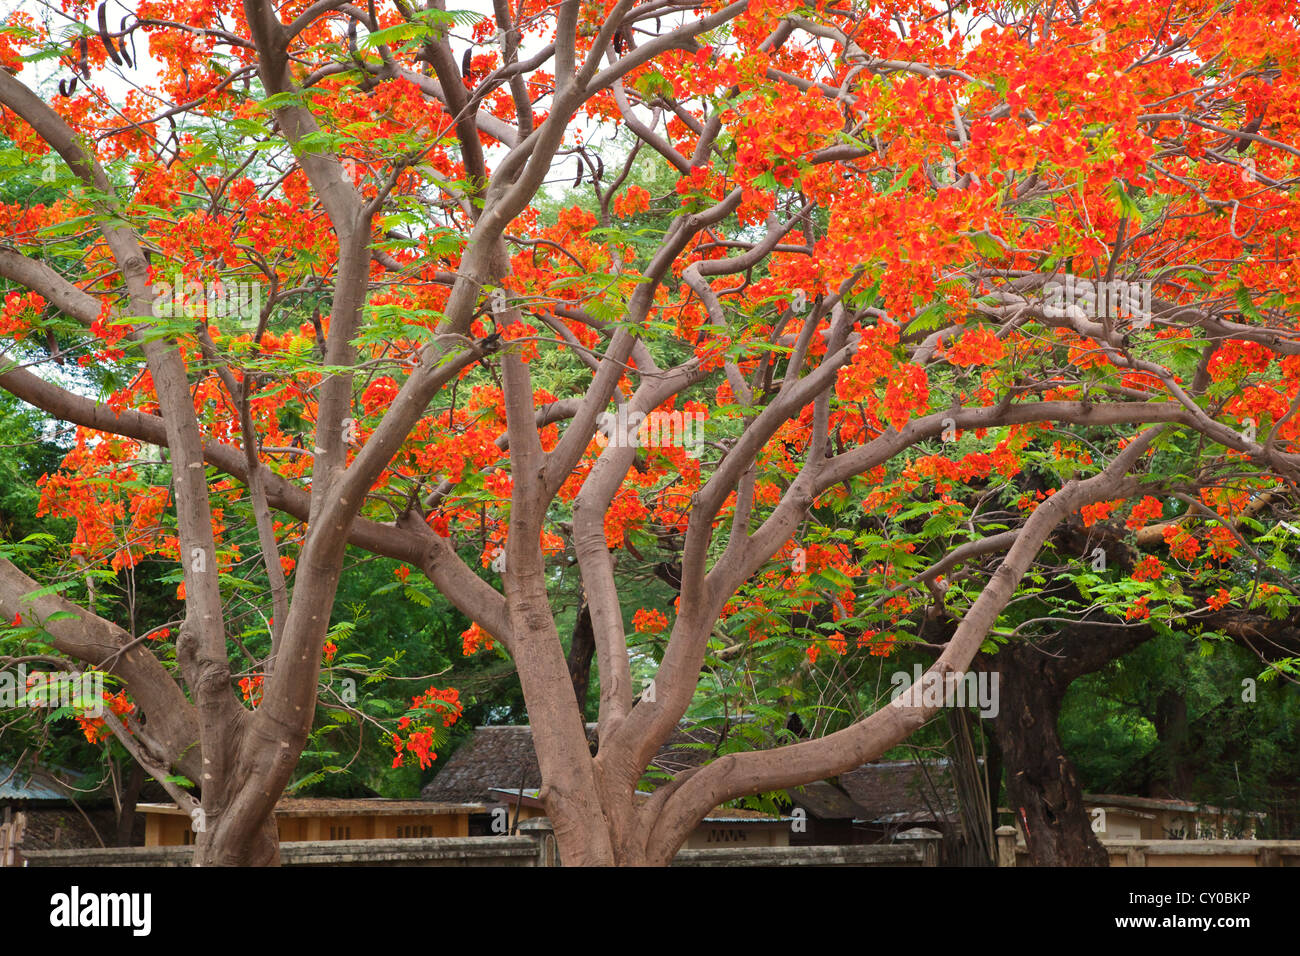 A FIRE TREE (Morella faya) in full bloom - BAGAN, MYANMAR Stock Photo